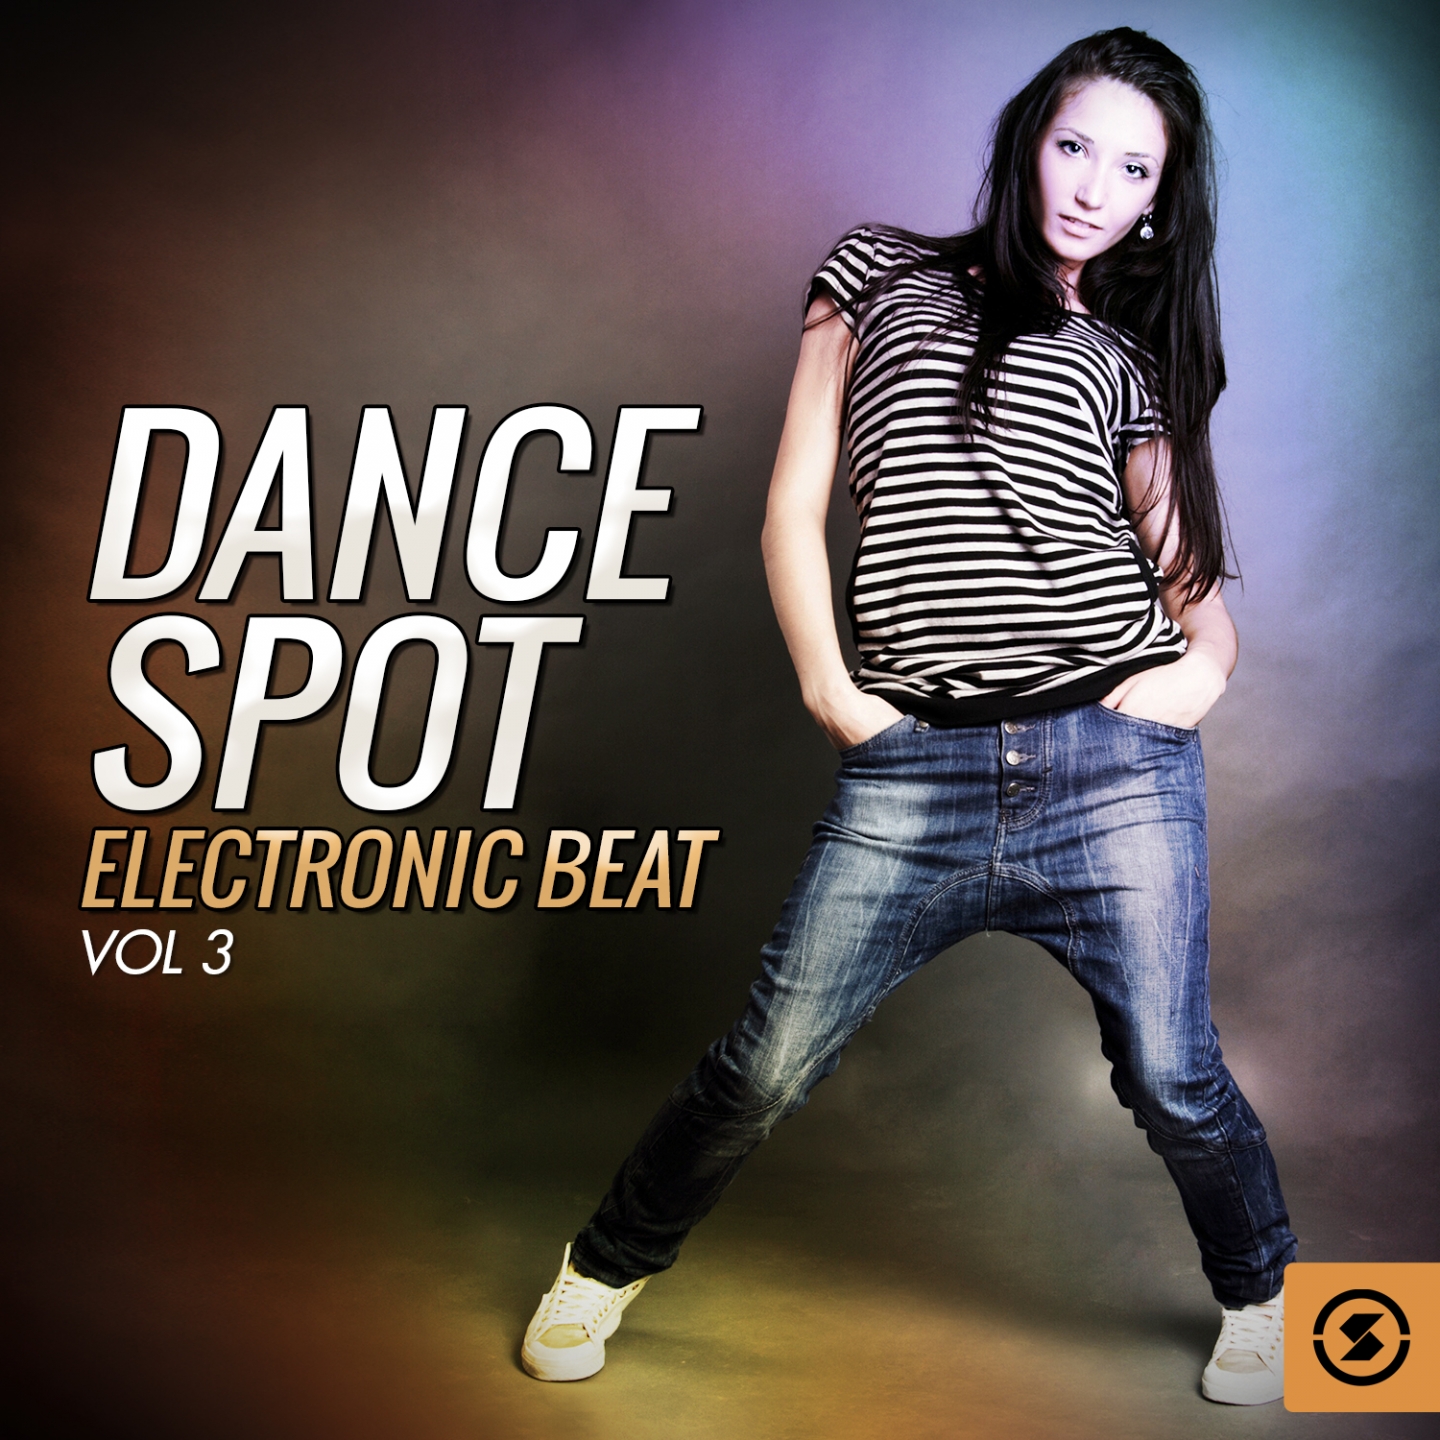 Dance Spot Electronic Beat, Vol. 3